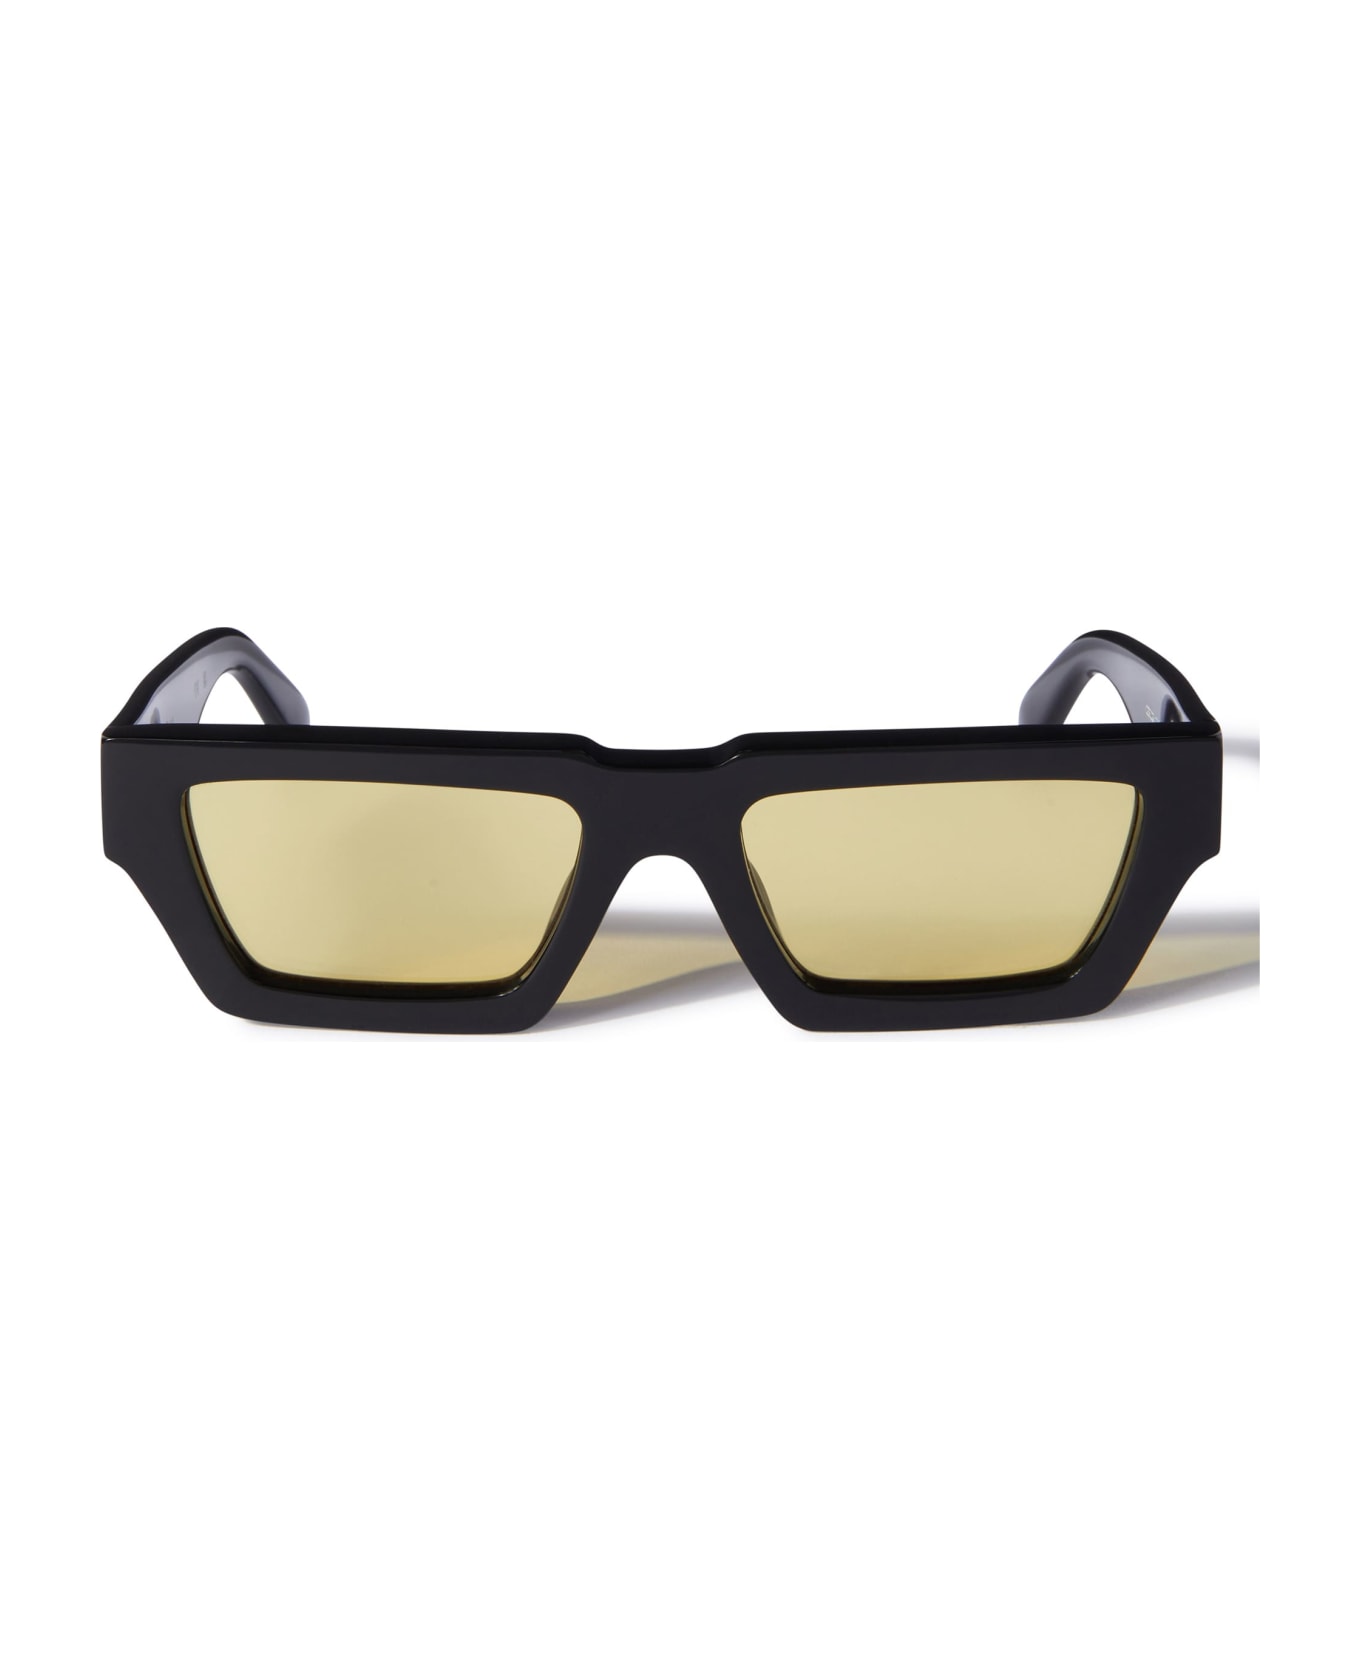 Off-White Manchester - Black / Yellow Sunglasses - Black